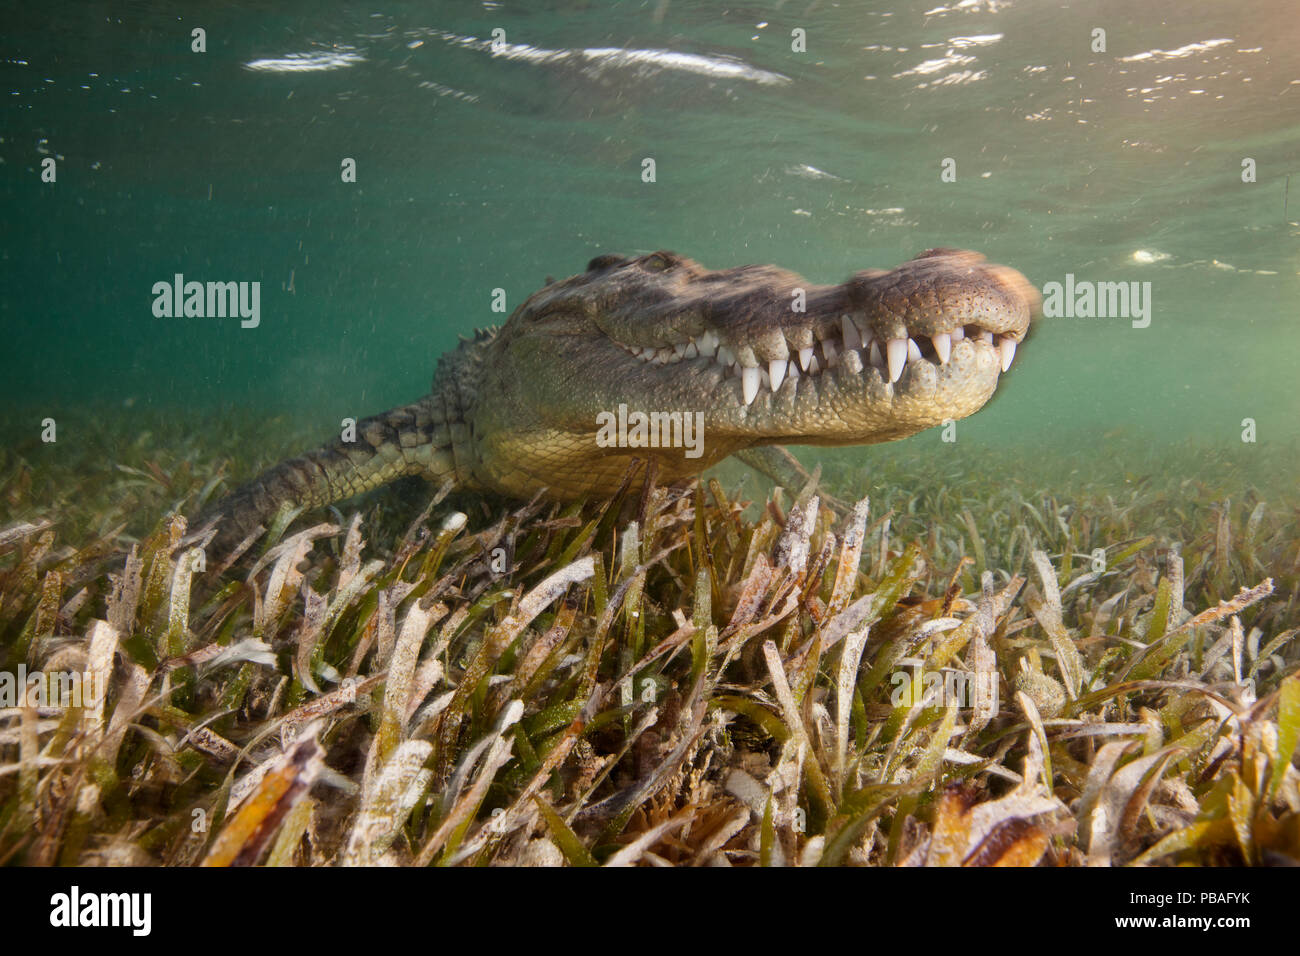 American crocodile (Crocodylus acutus) portrait over seagrass bed in shallow ater, Banco Chinchorro Biosphere Reserve, Caribbean region, Mexico, May. Stock Photo